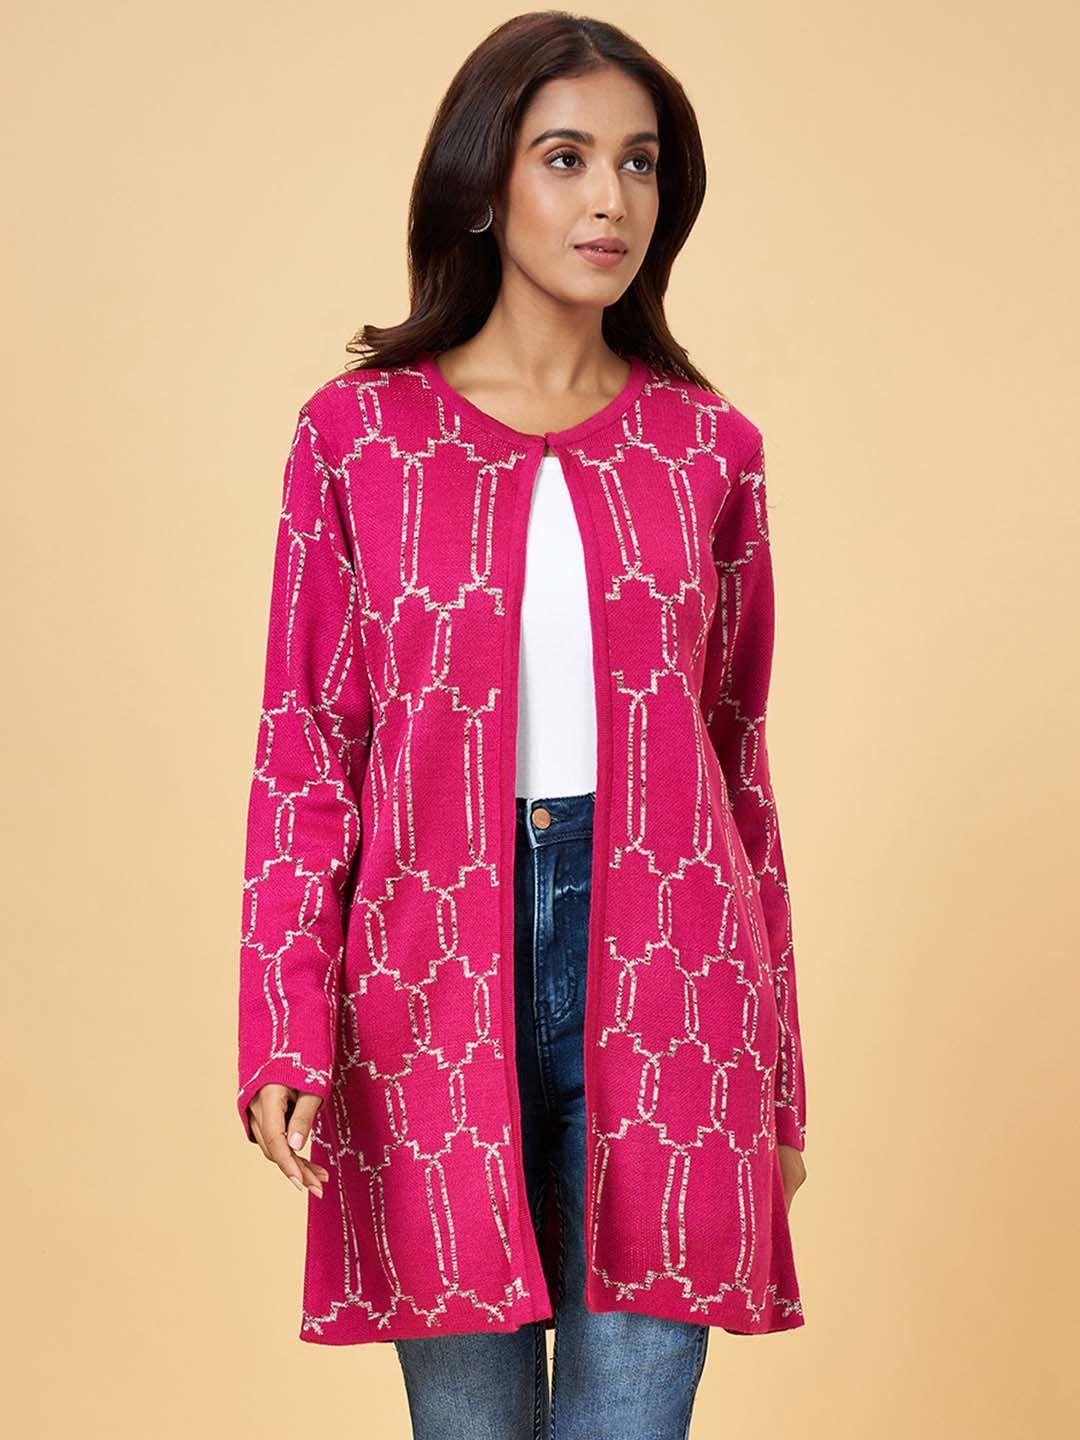 rangmanch by pantaloons women pink white geometric acrylic longline open front jacket